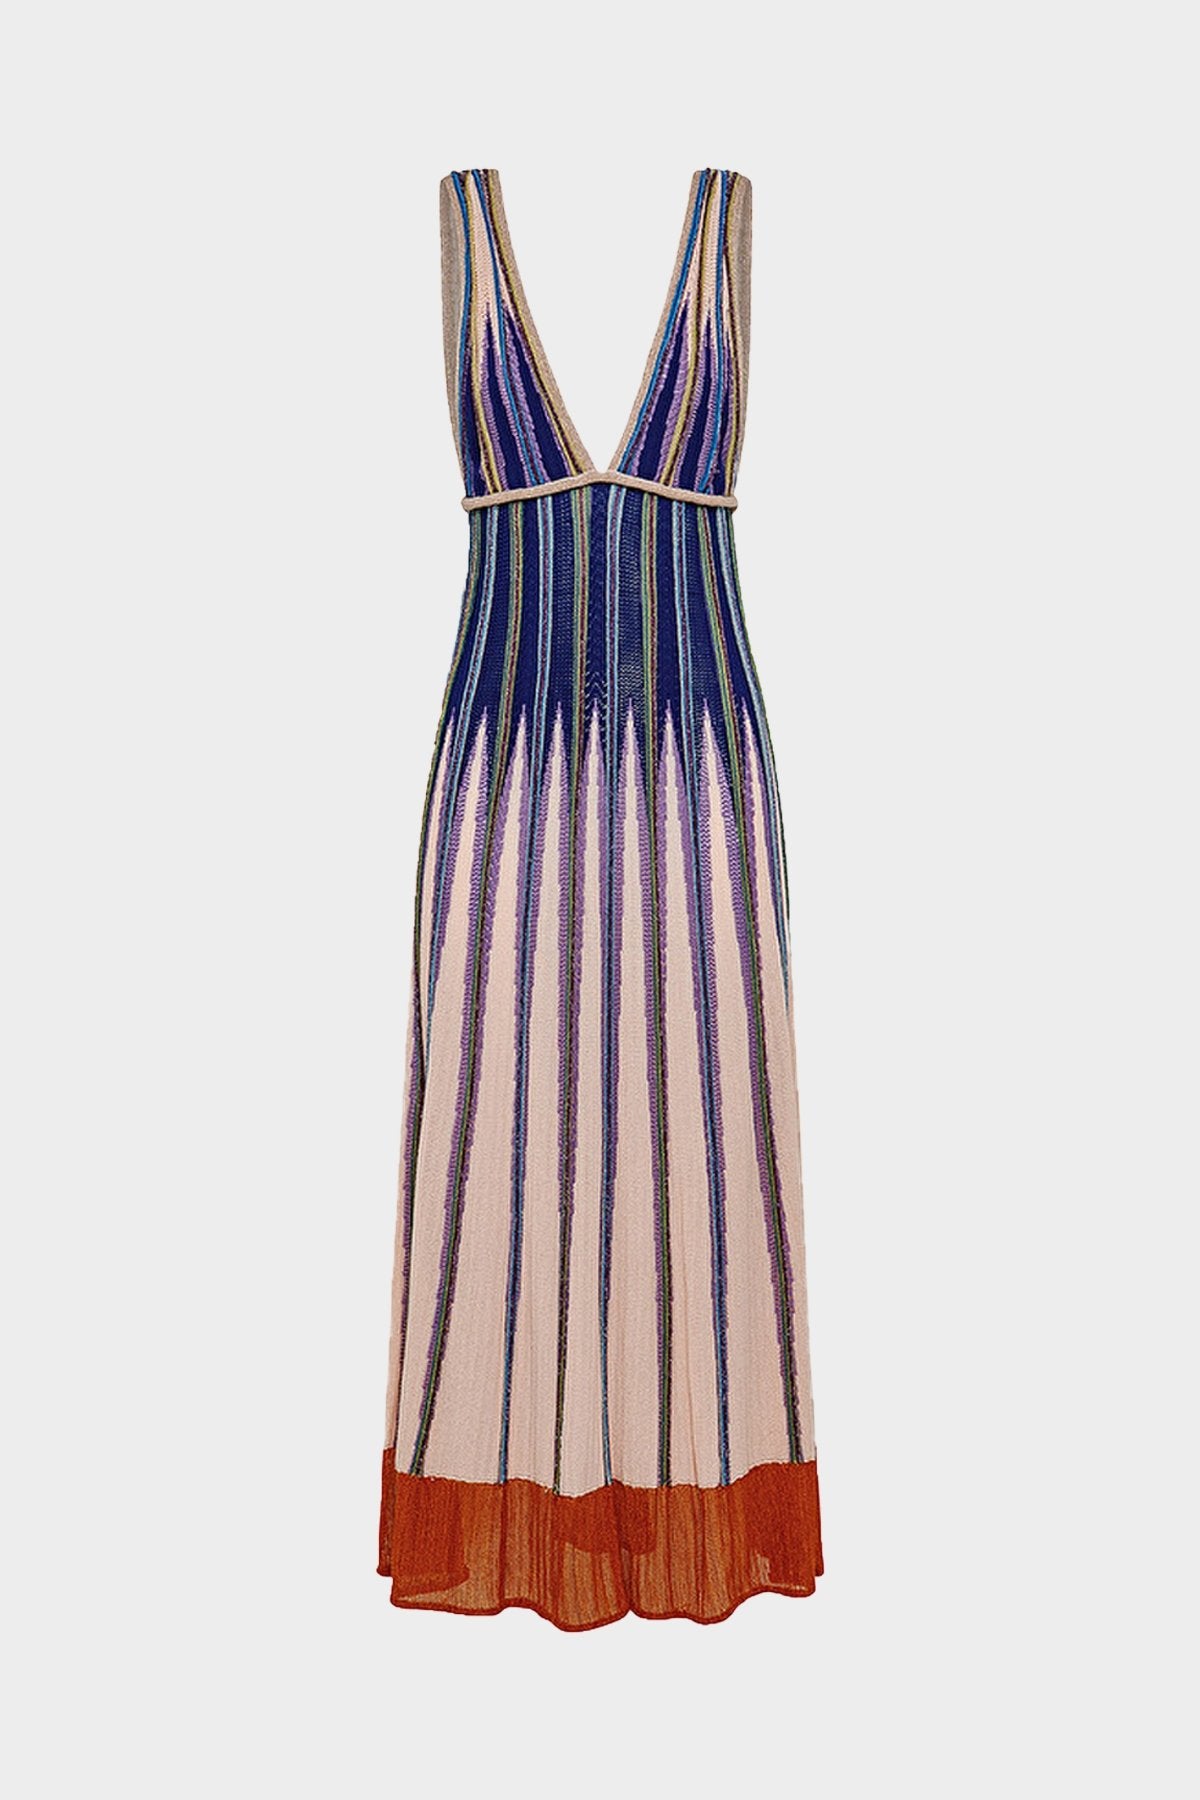 "Dancing Constellation" Intarsia Dress in Electric - shop-olivia.com